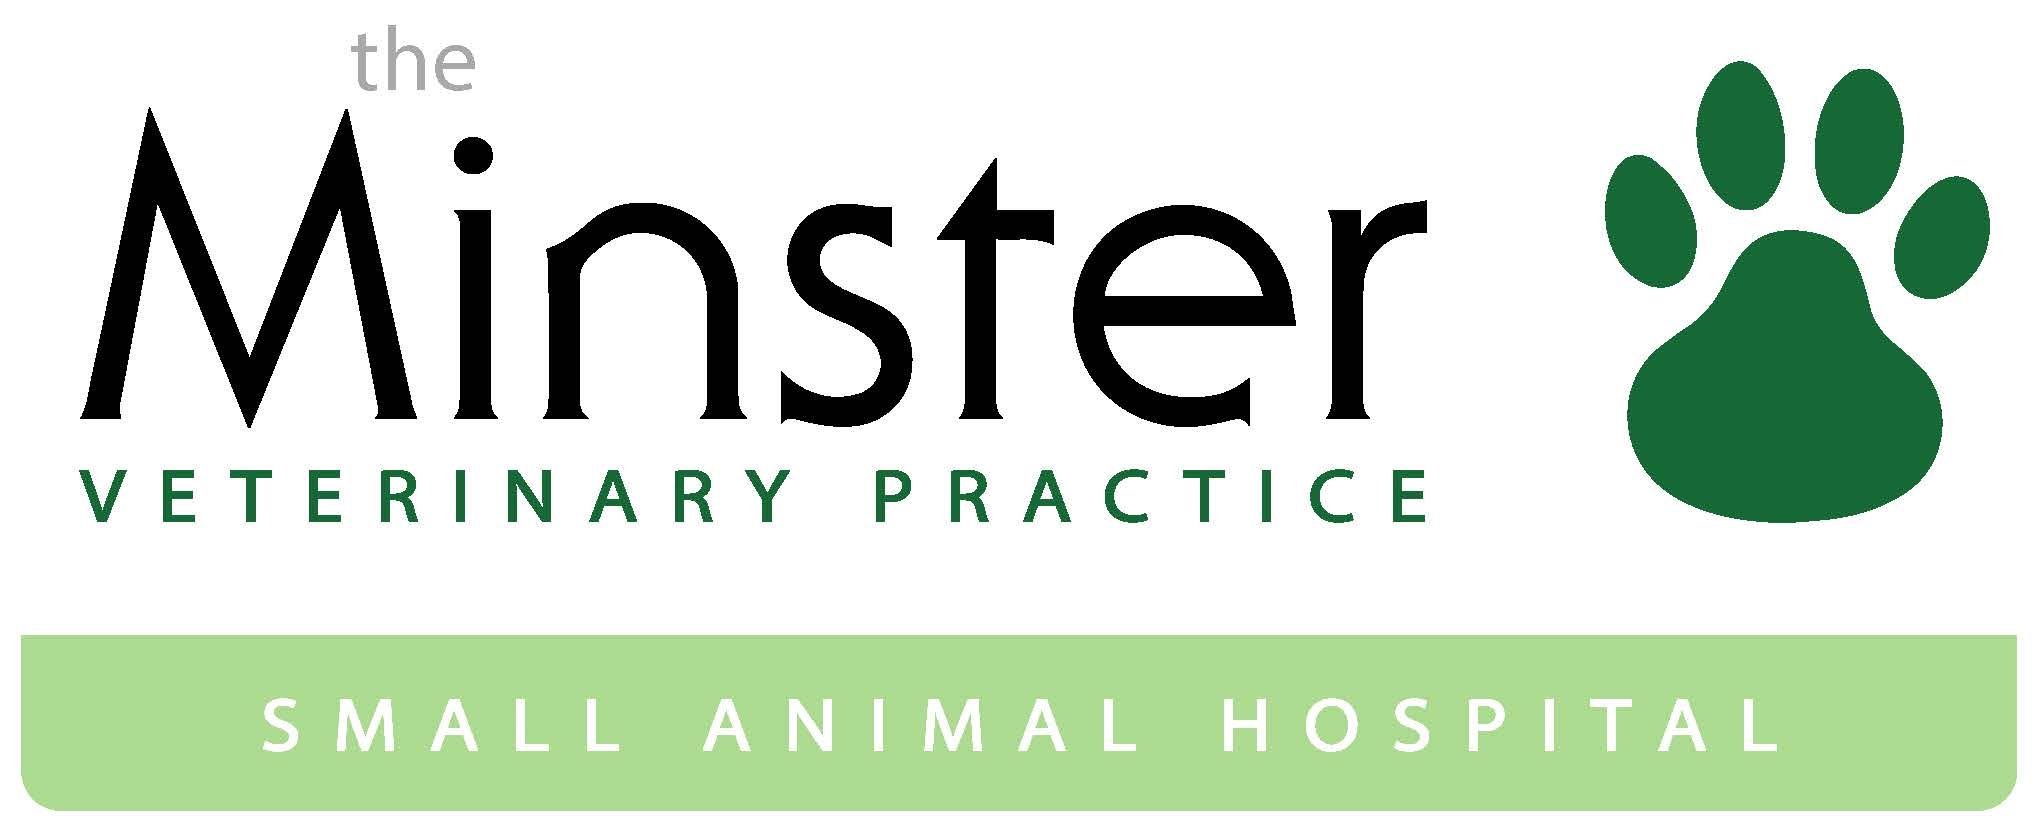 Minster Veterinary Practice Logo